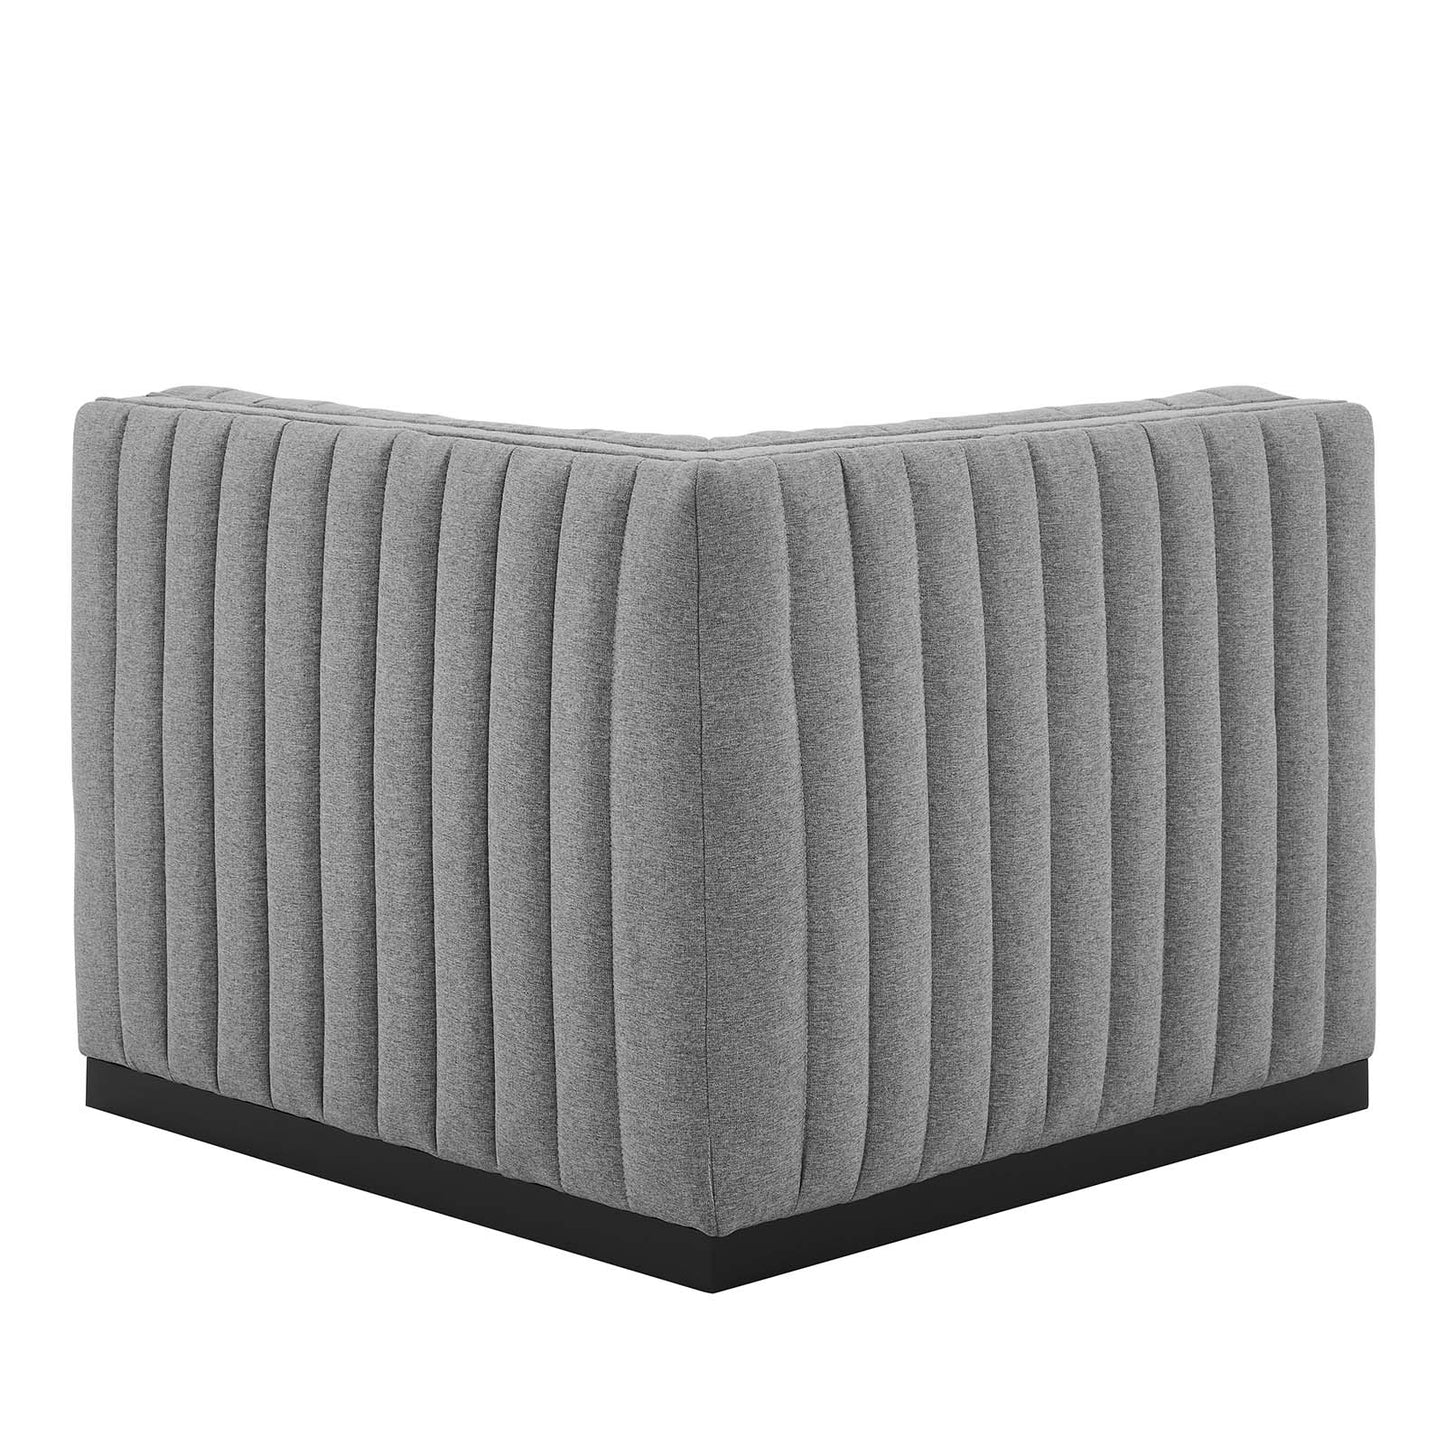 Conjure Channel Tufted Upholstered Fabric Left Corner Chair Black Light Gray EEI-5497-BLK-LGR